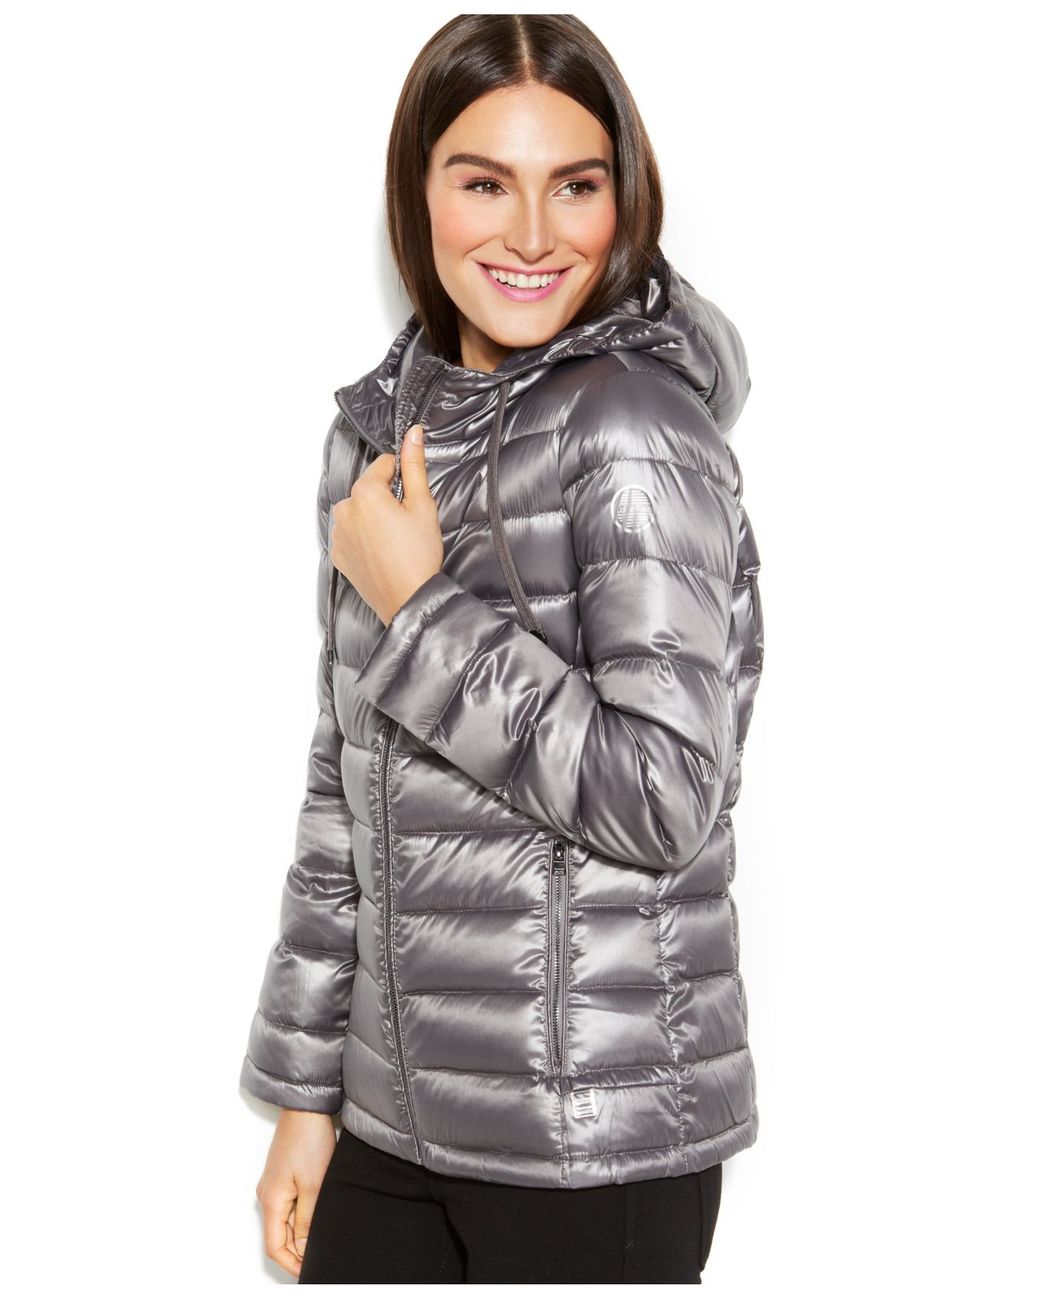 Total 82+ imagen calvin klein womens puffer jacket - Viaterra.mx